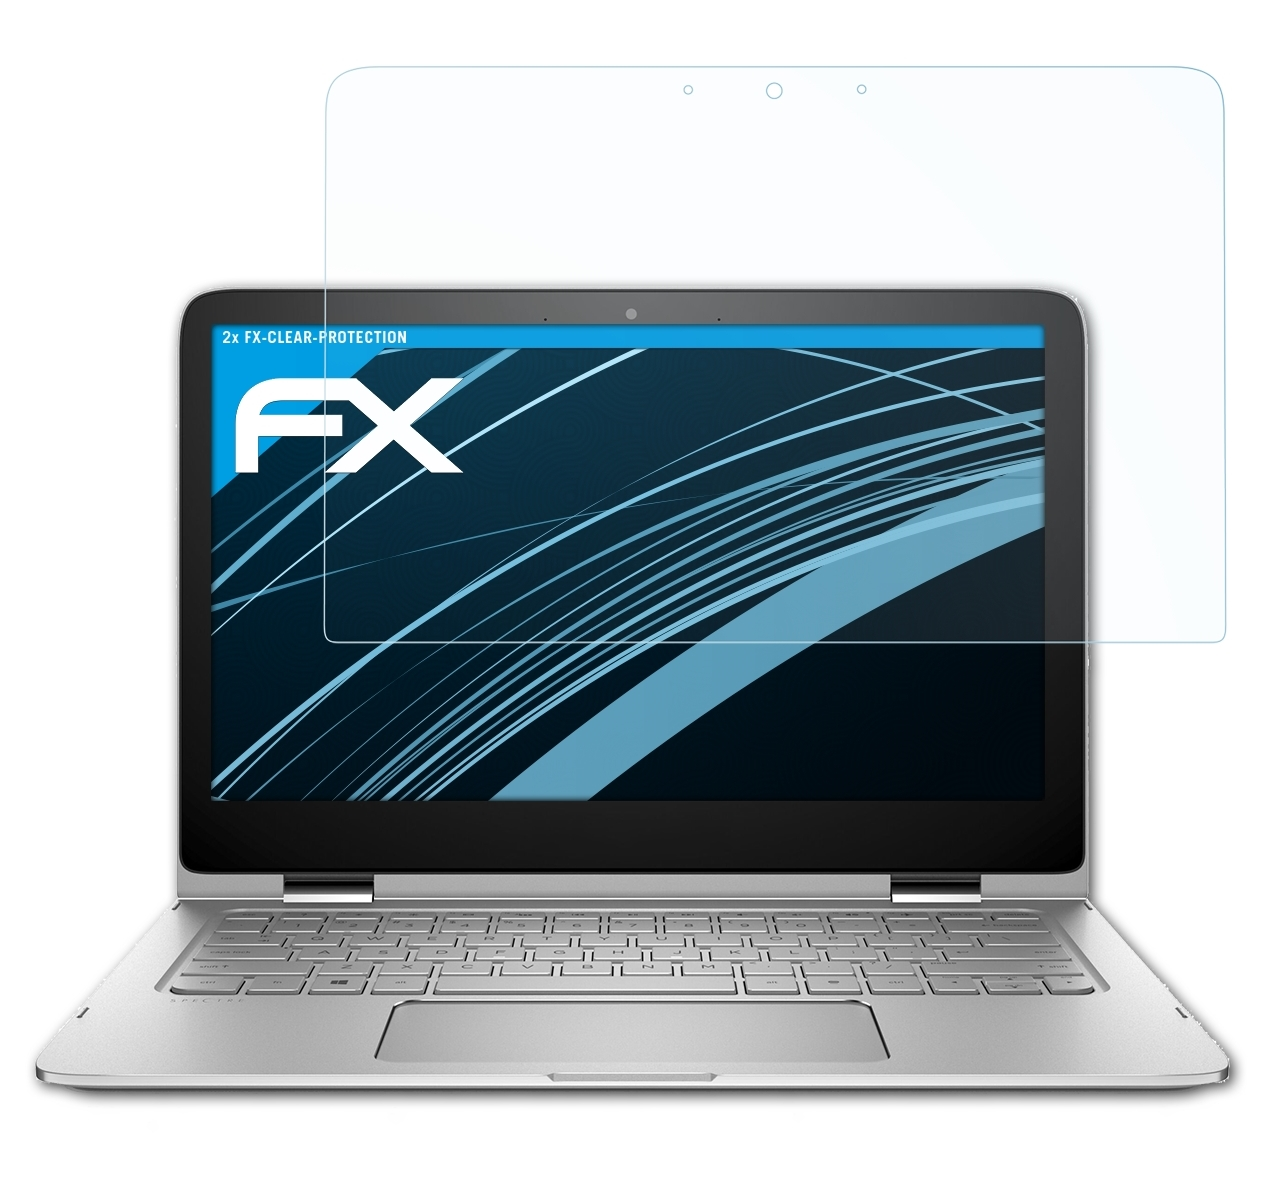 ATFOLIX 2x FX-Clear x360 Spectre Displayschutz(für 13-4157ng) HP